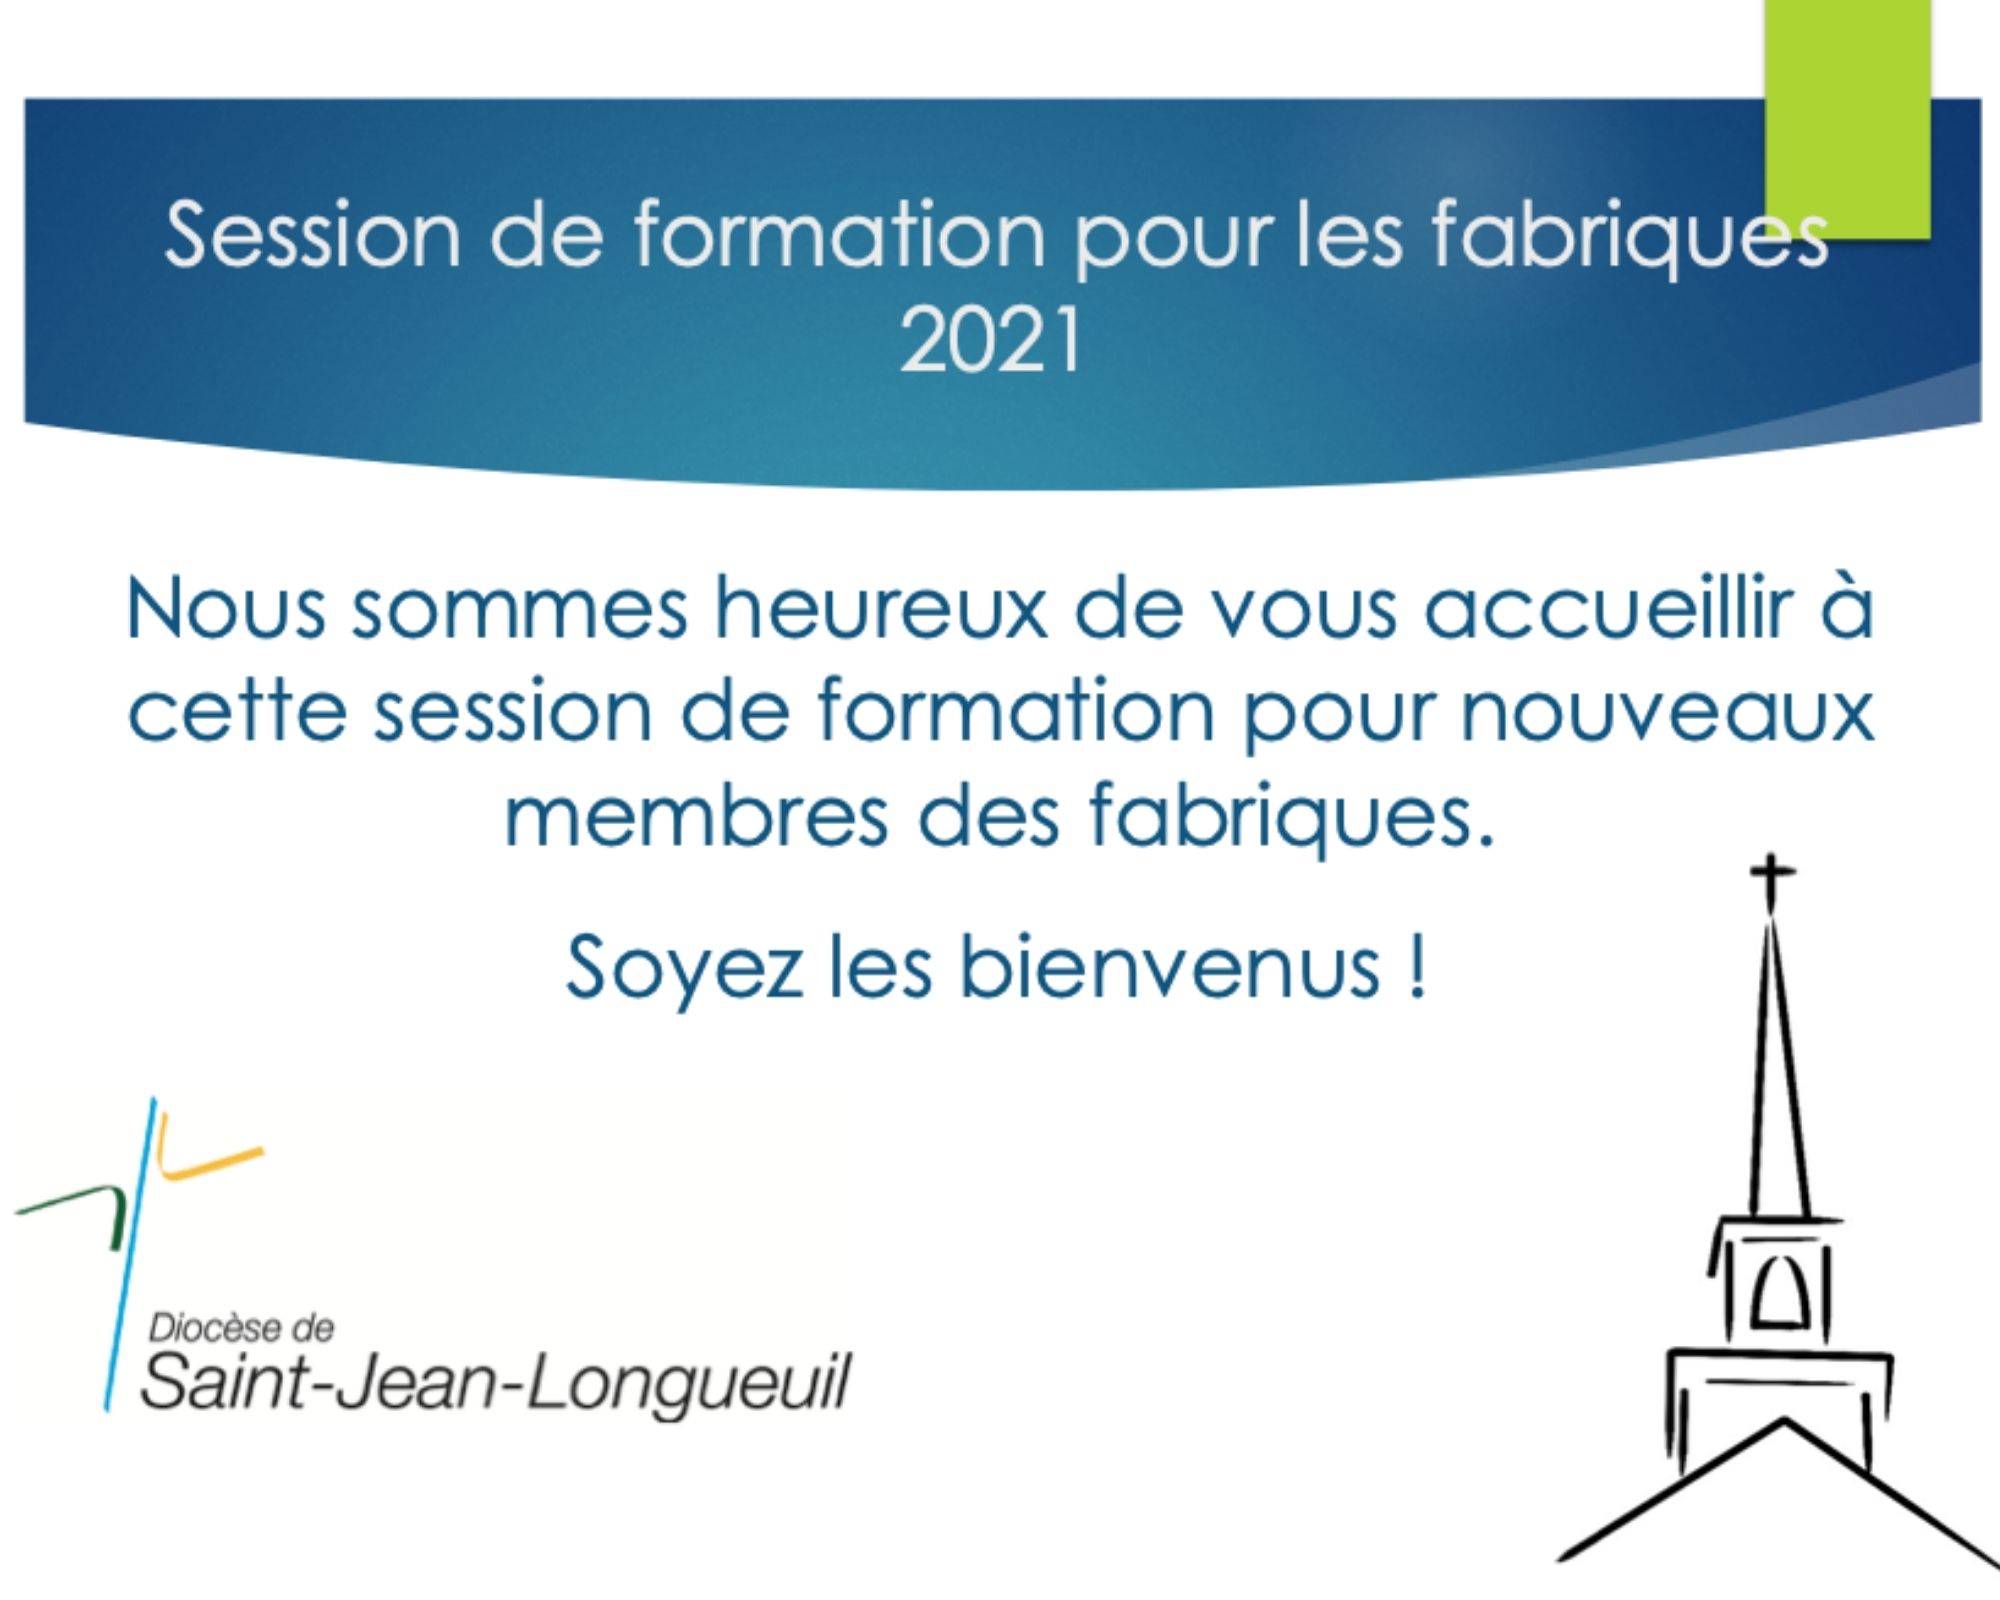 formation_fabrique_2021-image_PPT2.jpg